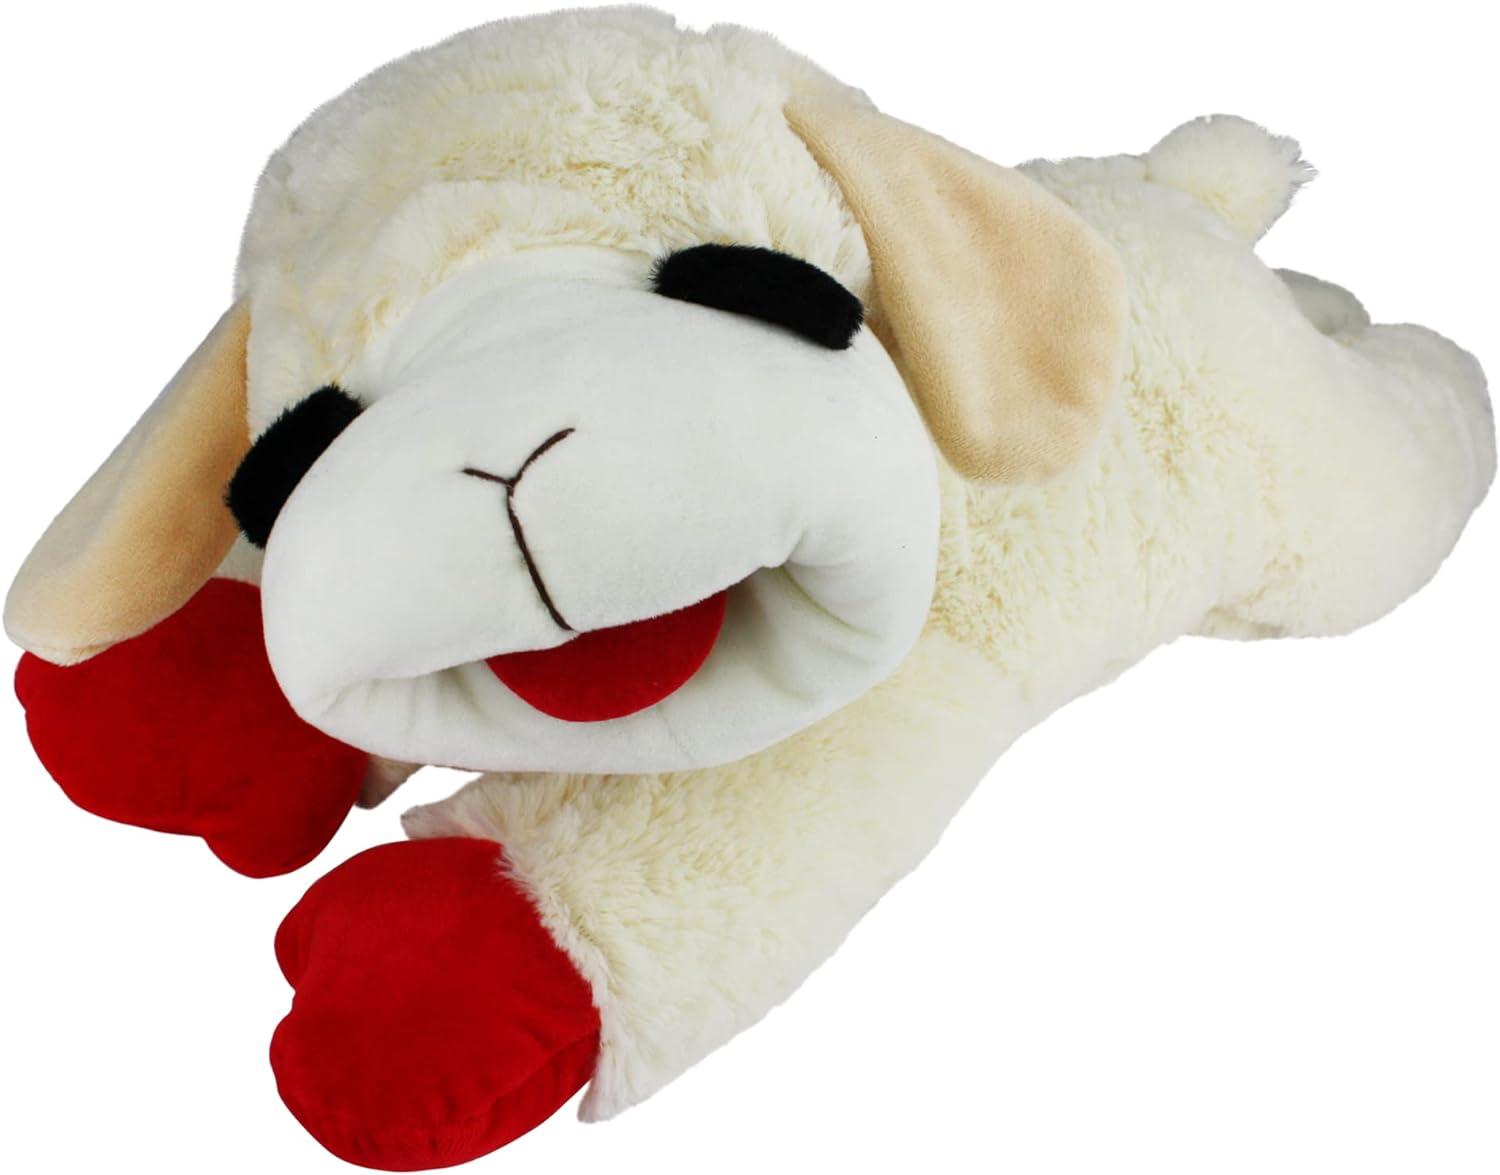 Multipet Officially Licensed Lamb Chop Jumbo White Plush Dog Toy for $8